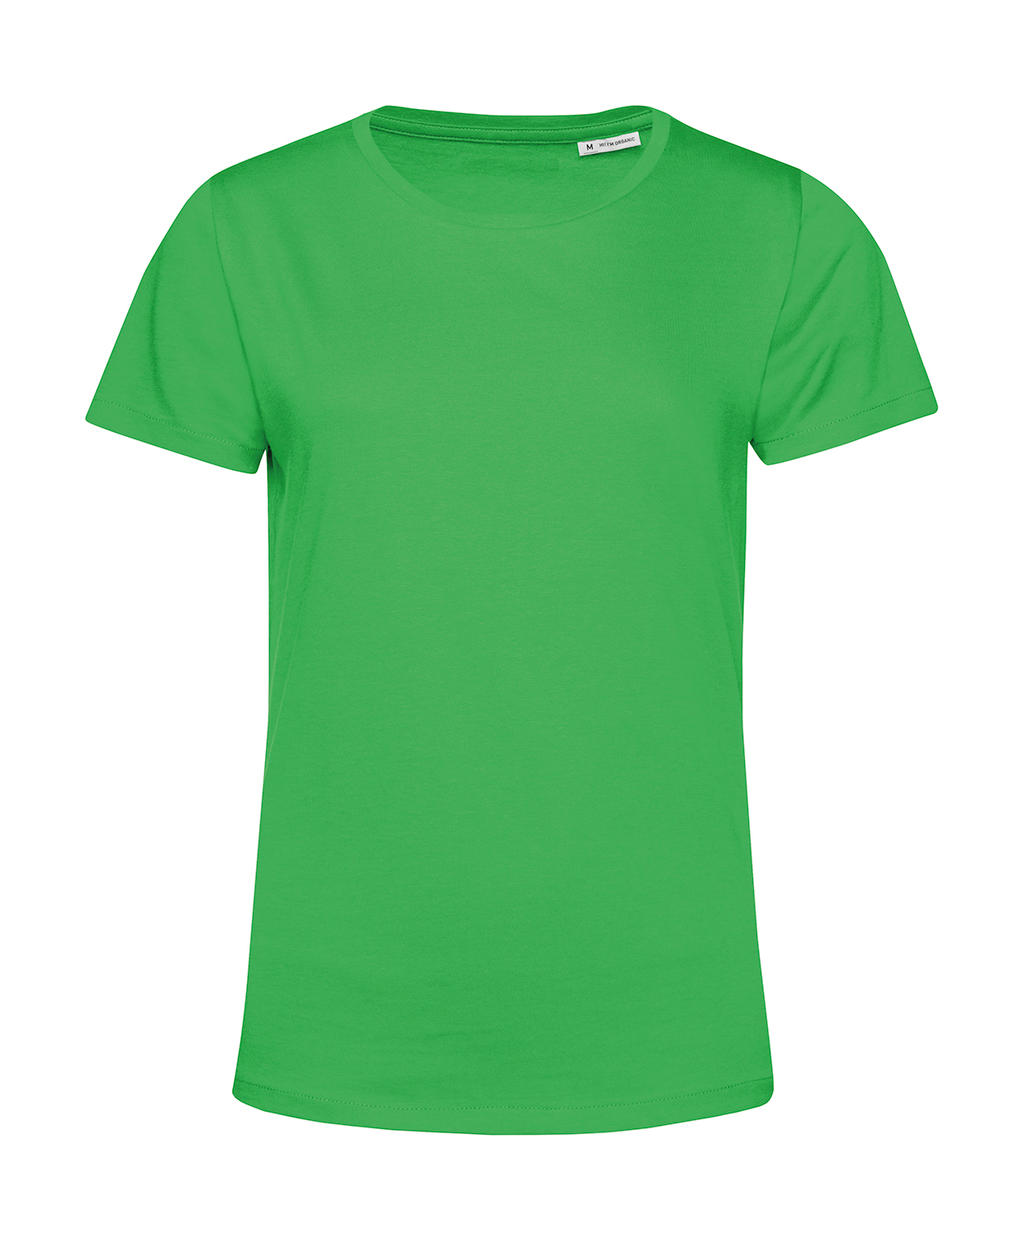 Tričko dámské BC Organic Inspire E150 - zelené, XS